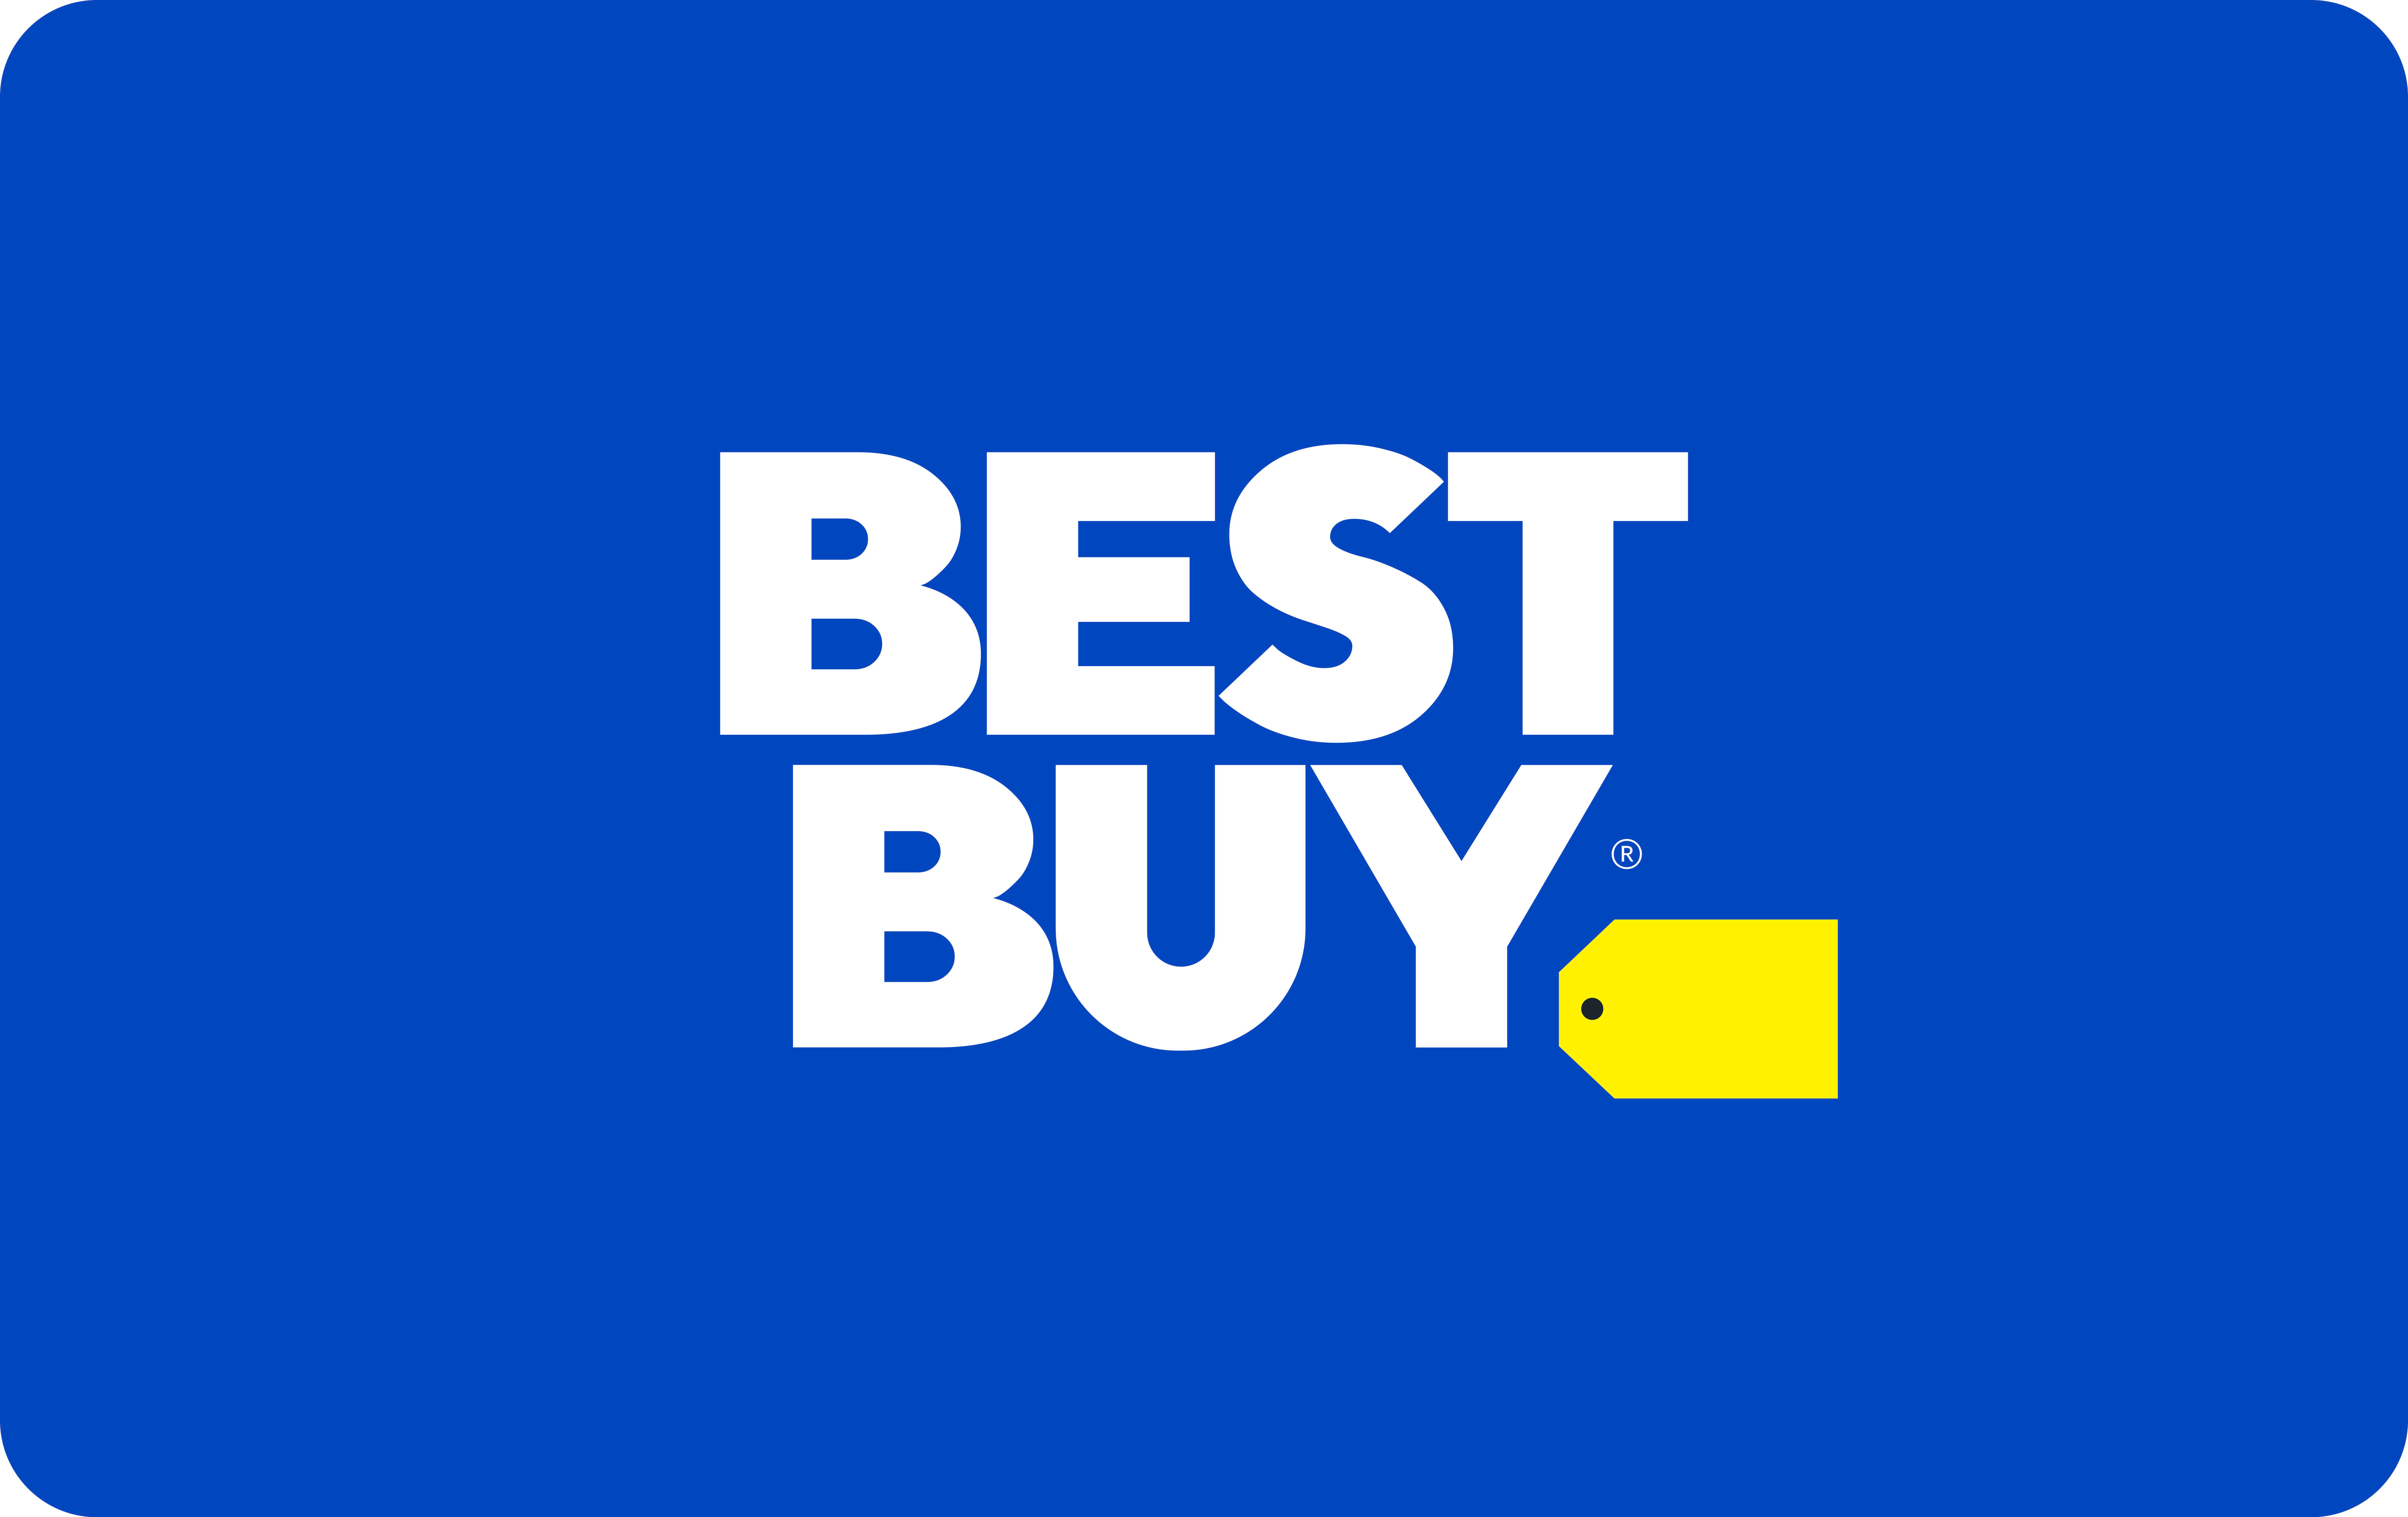 Best Buy® $15 Pixelated Gift Card 6451972 - Best Buy